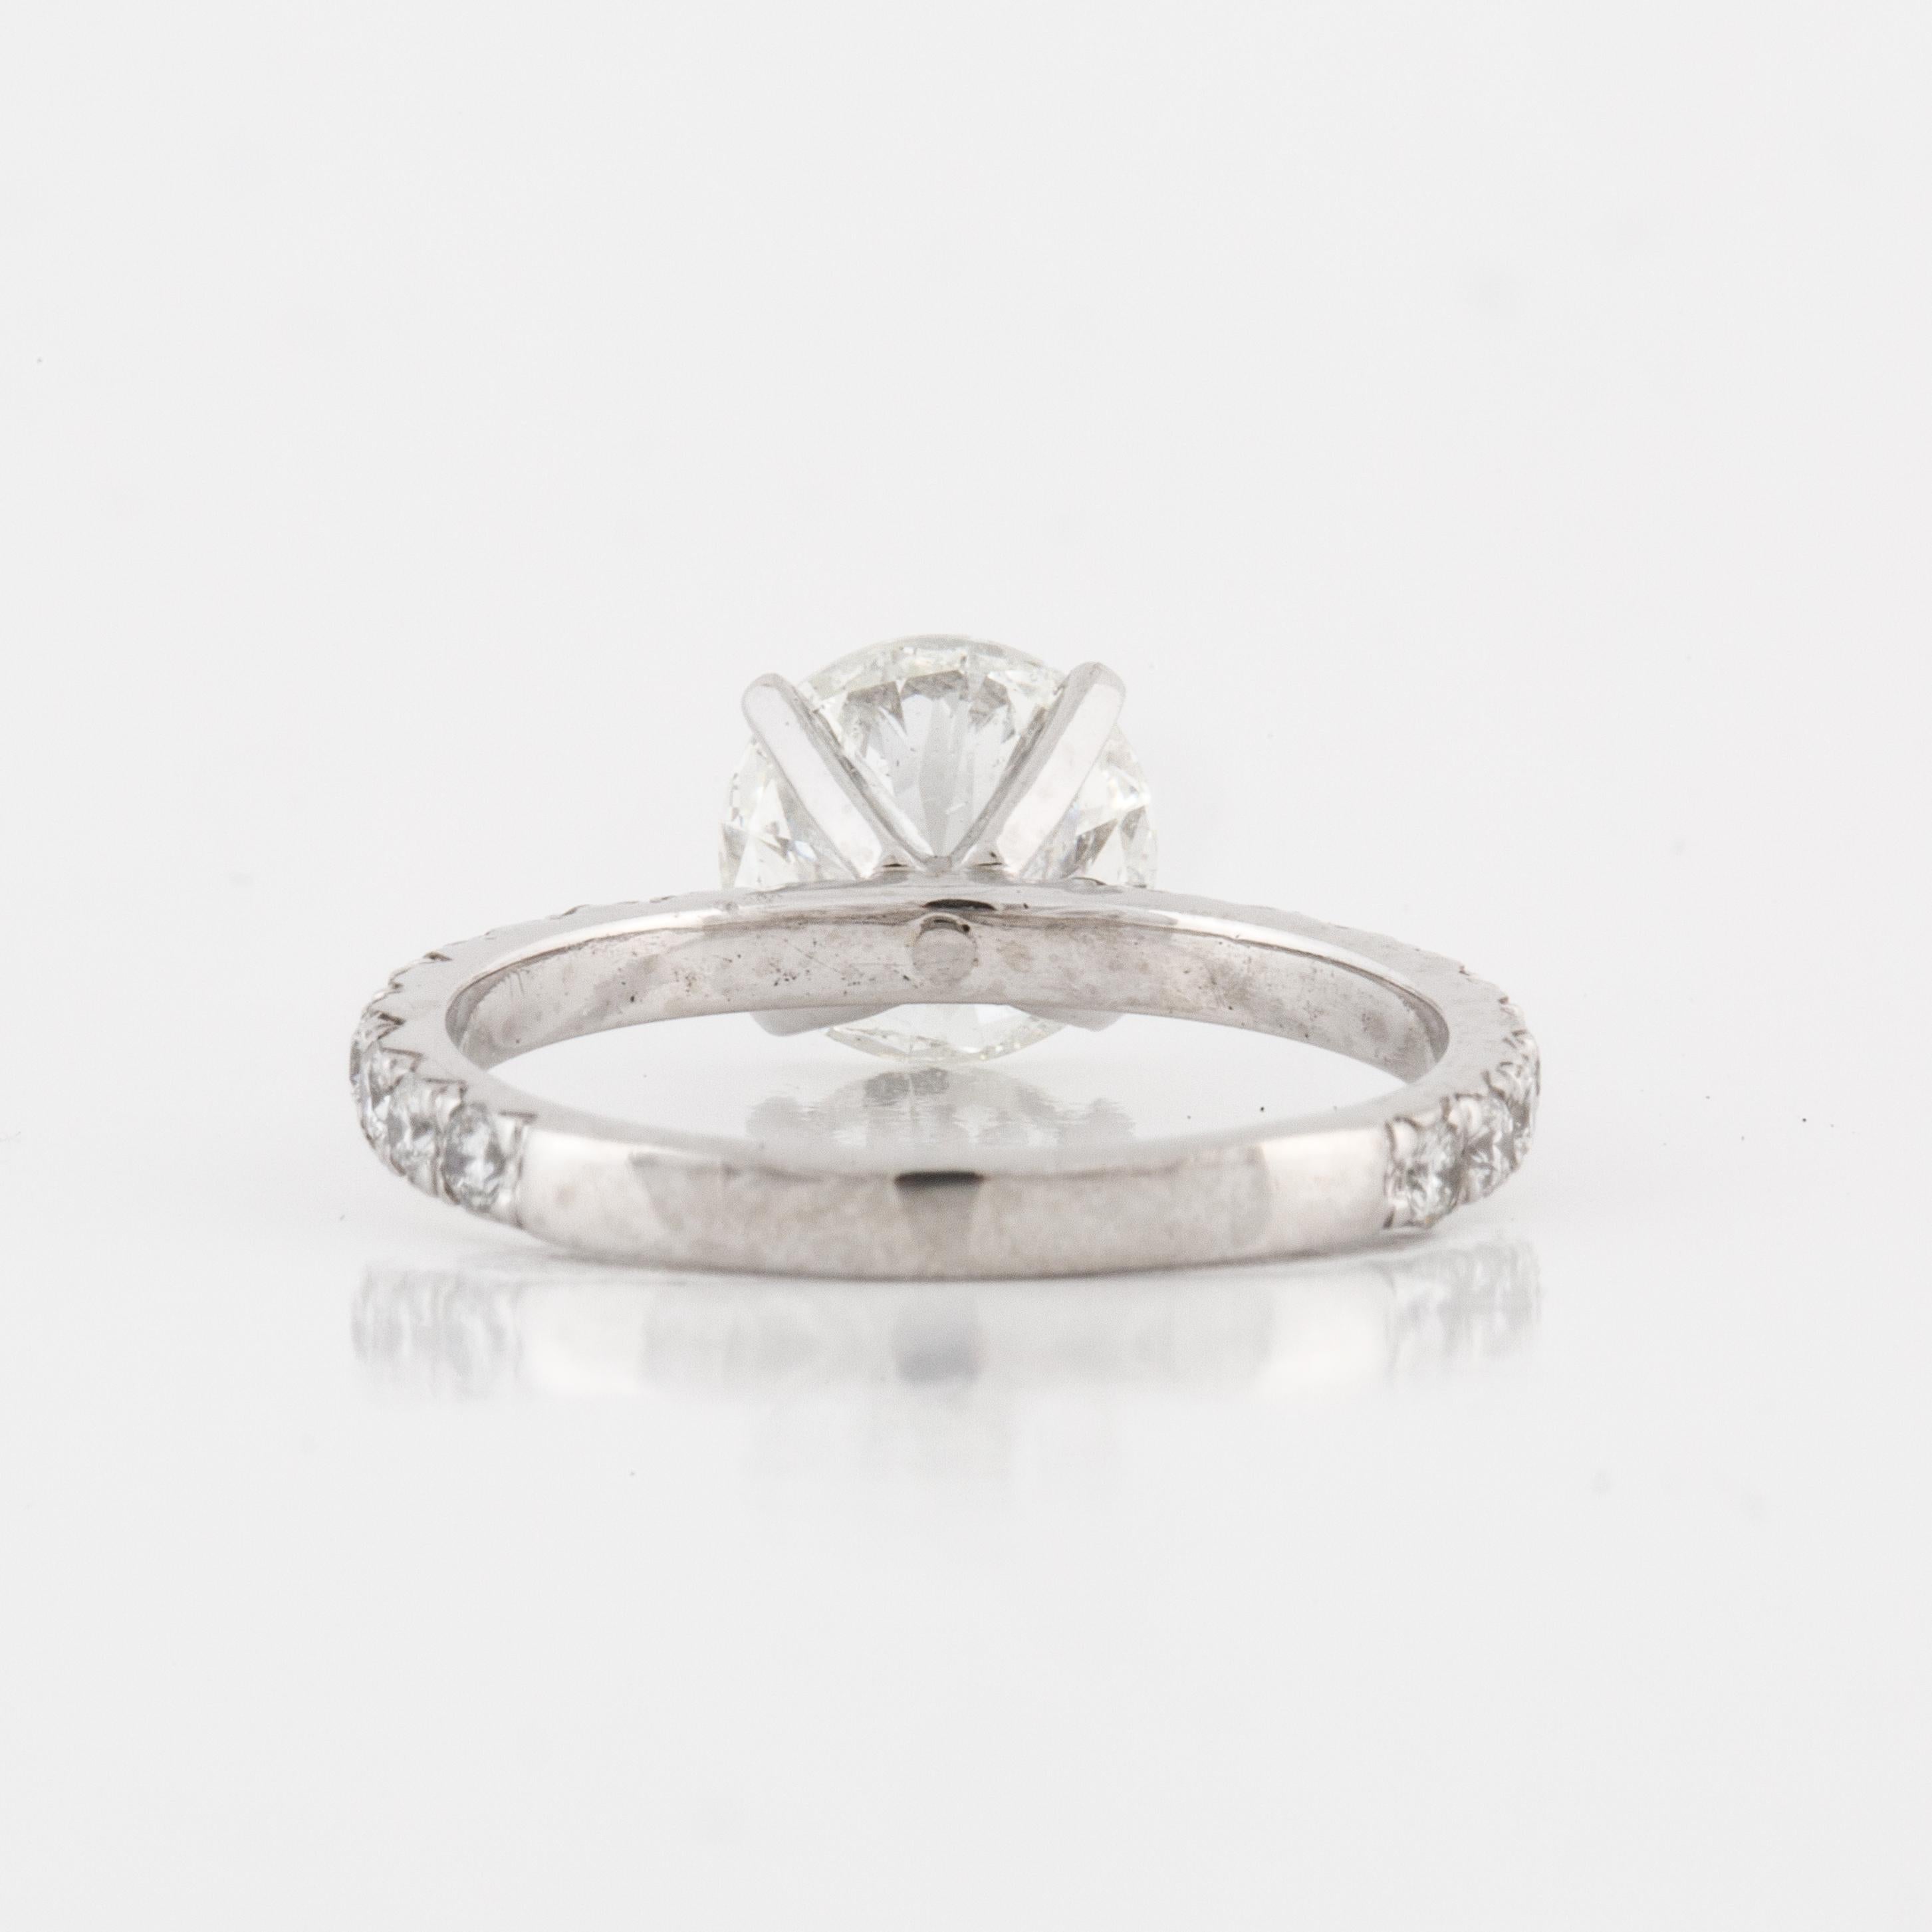 Women's or Men's GIA Certified 1.08 Carat Diamond Solitaire Ring